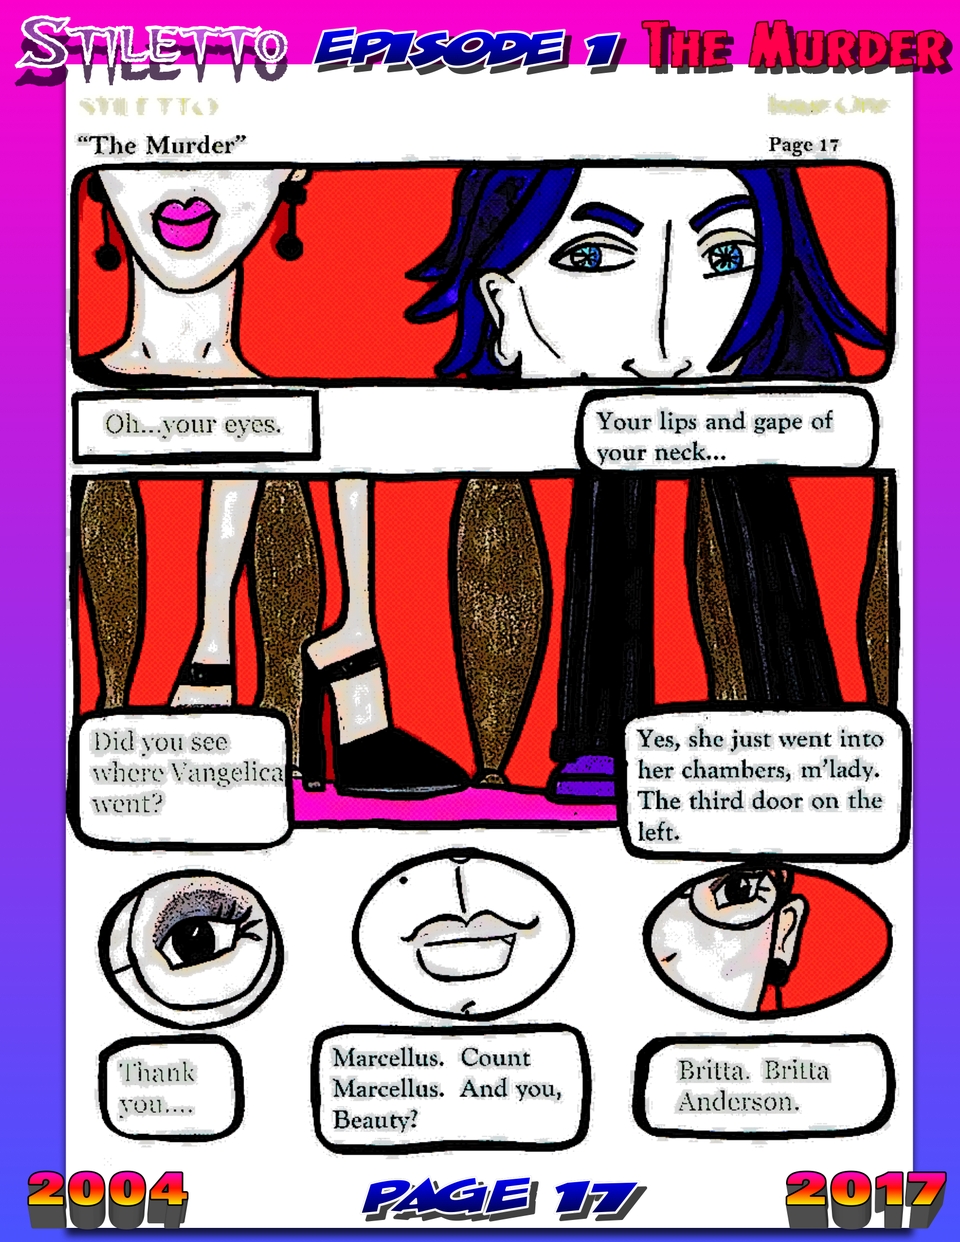 Stiletto : A Mystery Noir Webcomic Episode 1 pg. 17